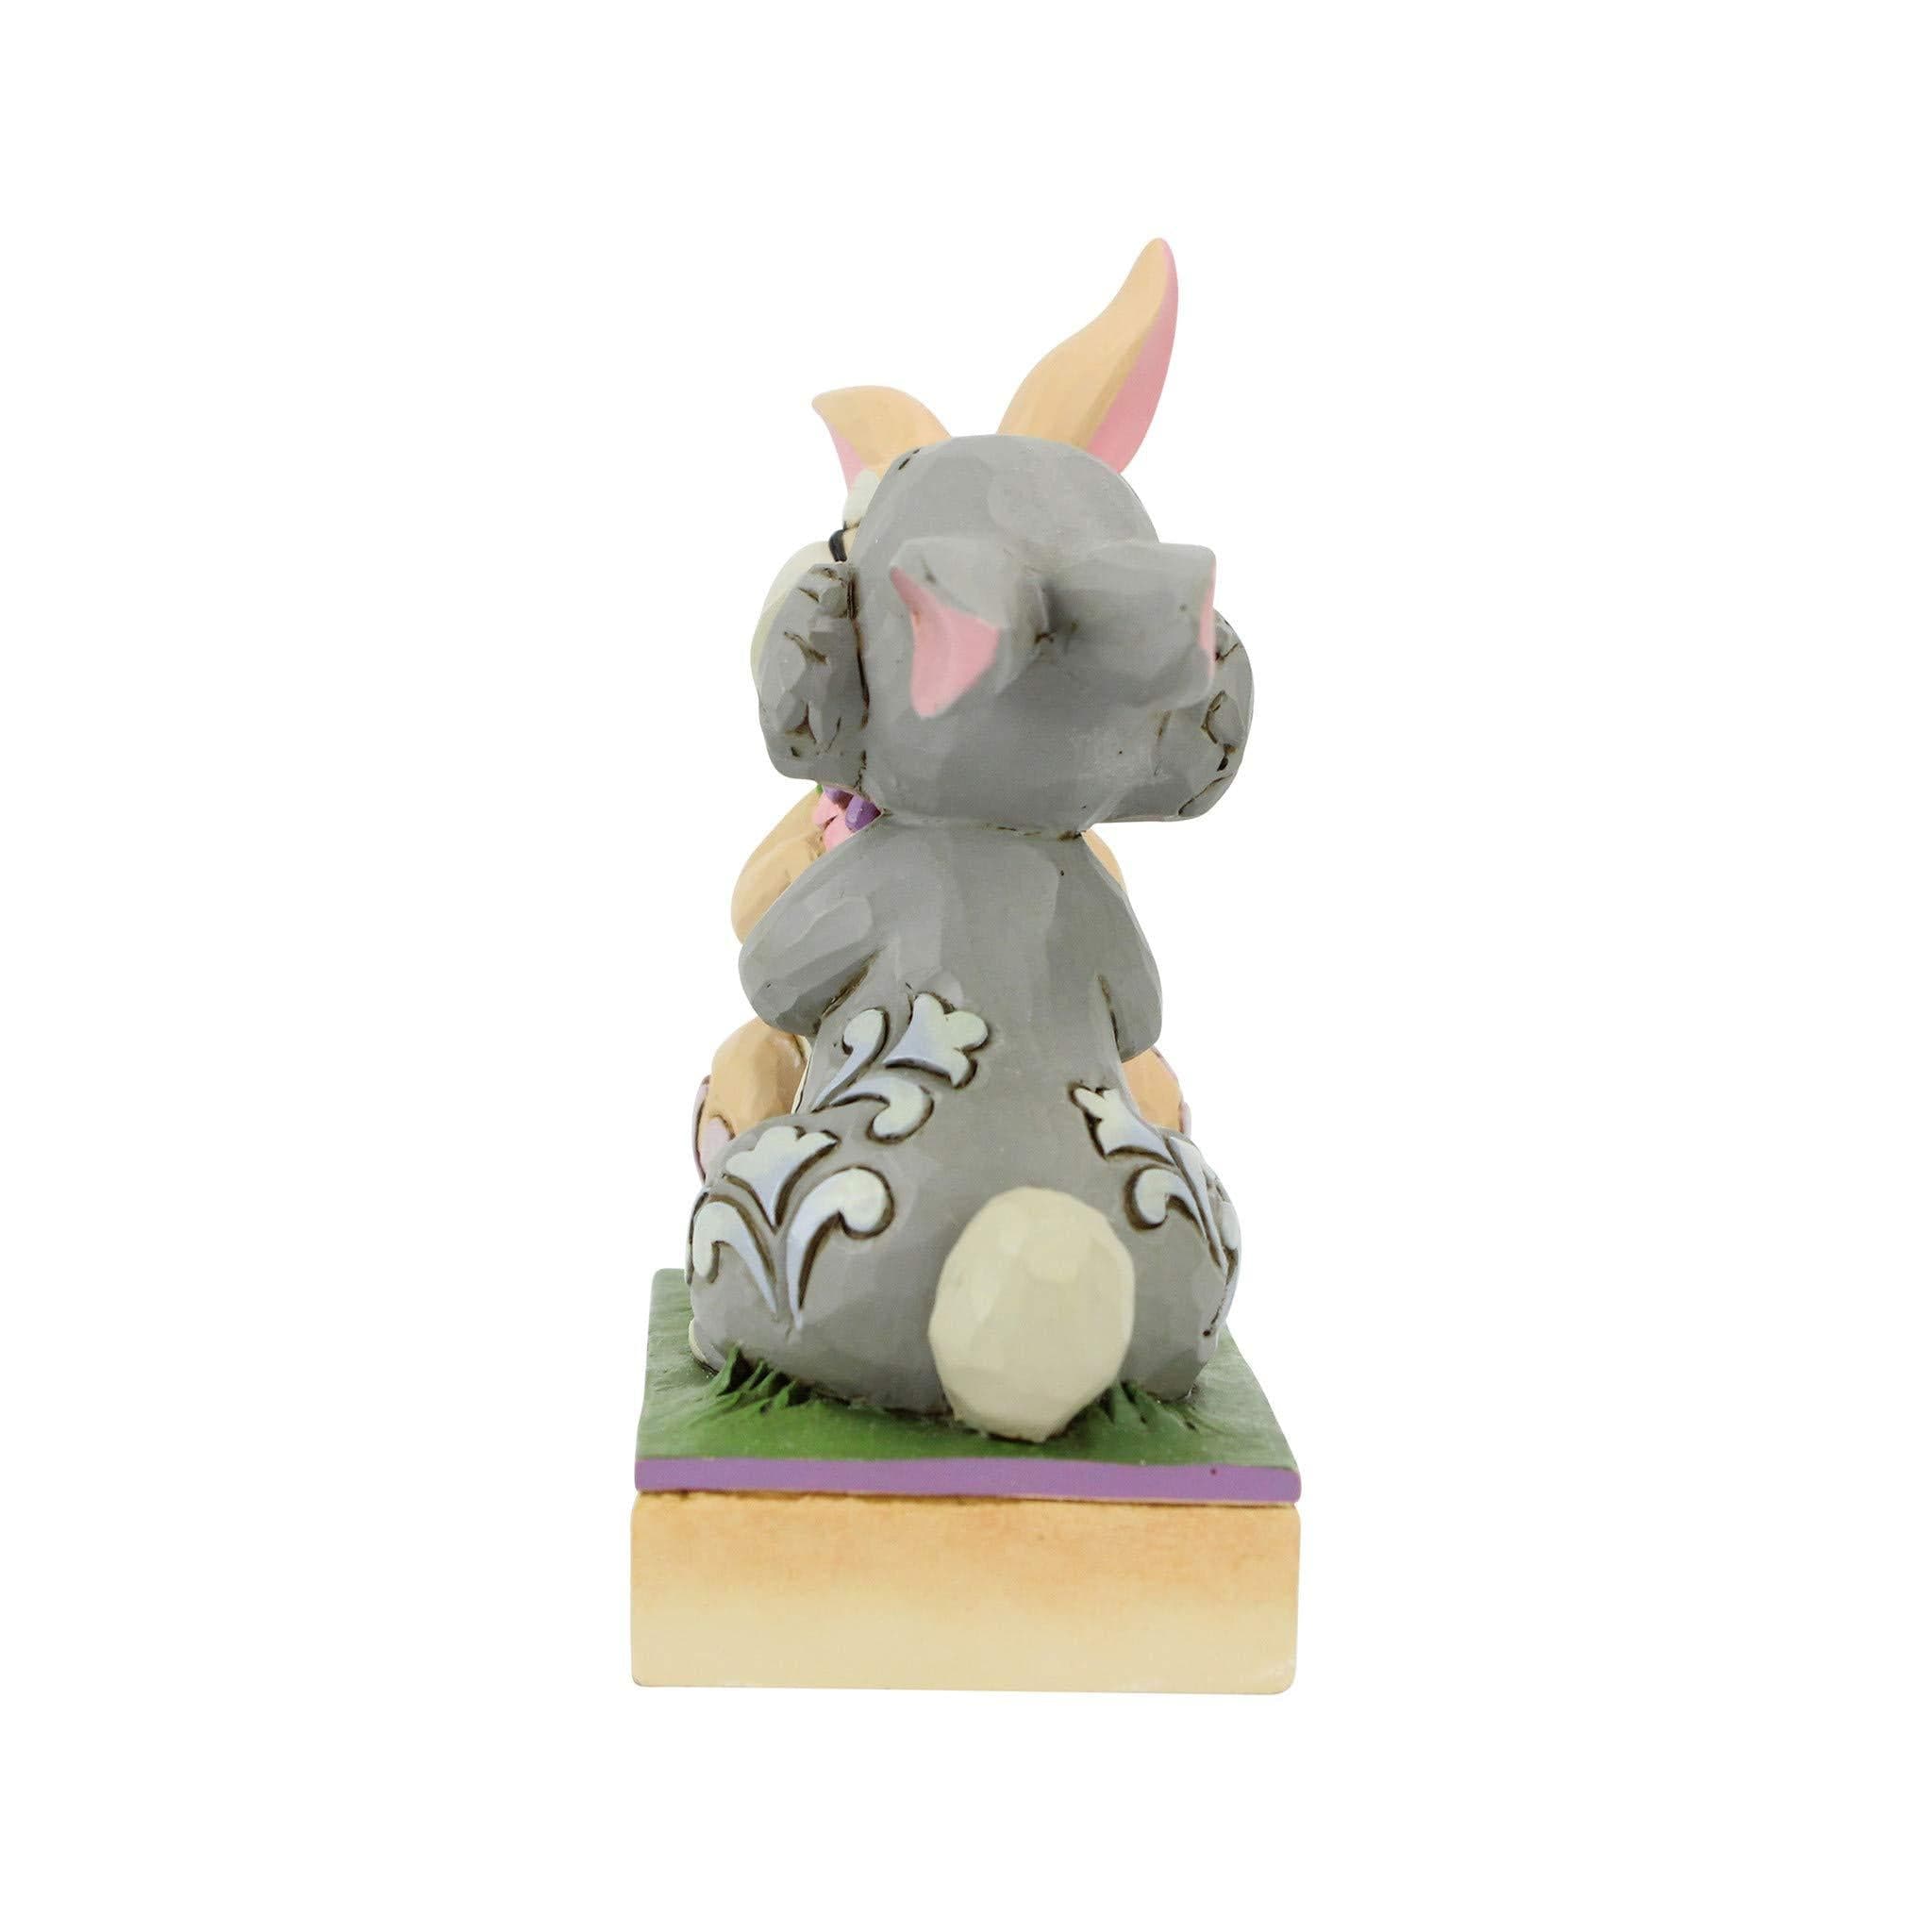 Enesco Disney Ornament Disney Traditions Figurine - Bunny Bouquet (Thumper and Blossom Figurine)